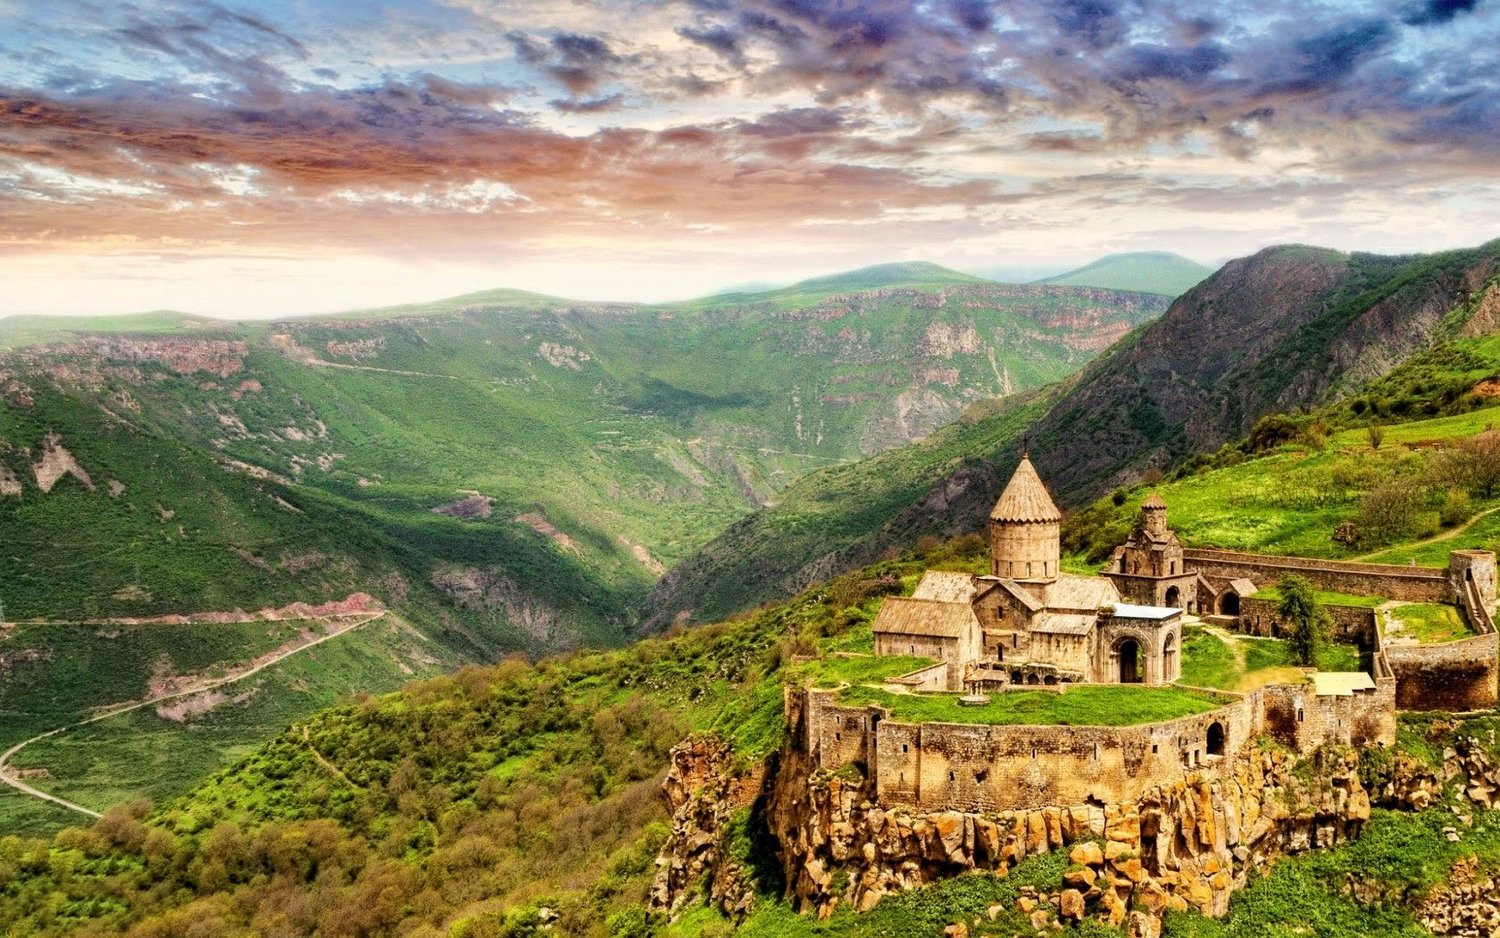 Armenian Church History – The Krikor and Clara Zohrab Information